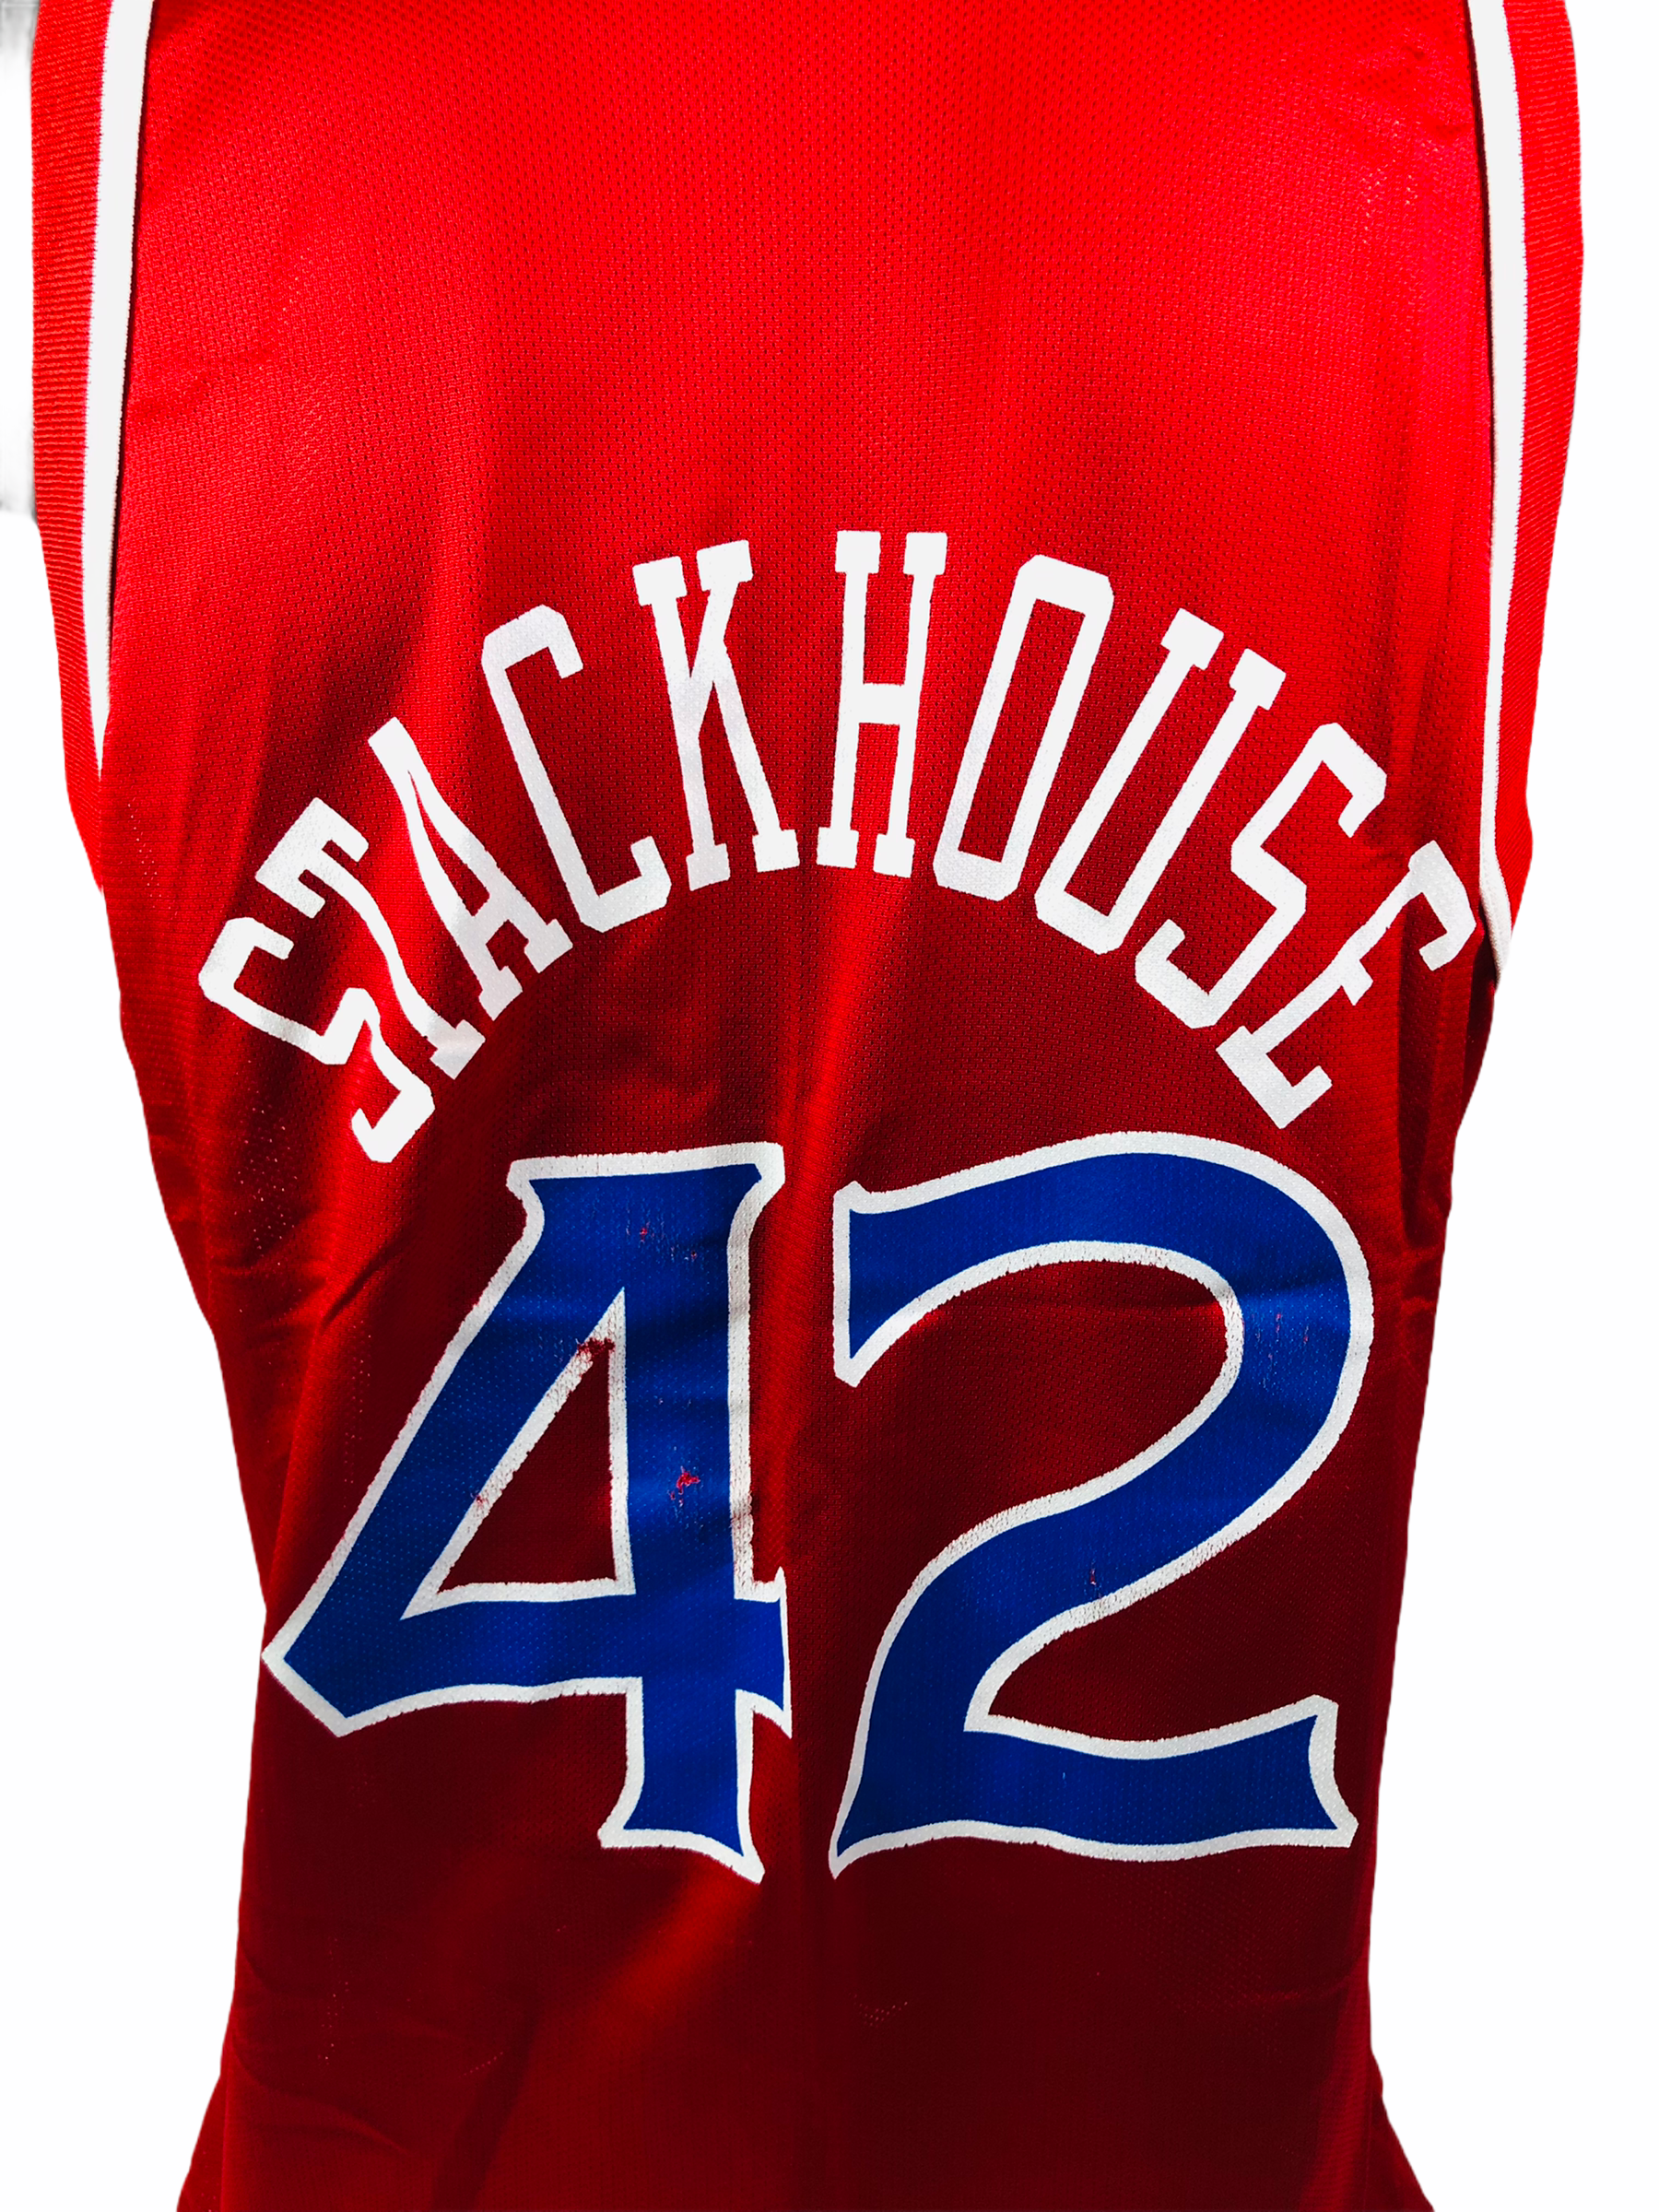 Vintage Philadelphia Sixers Jerry Stackhouse Champion Jersey